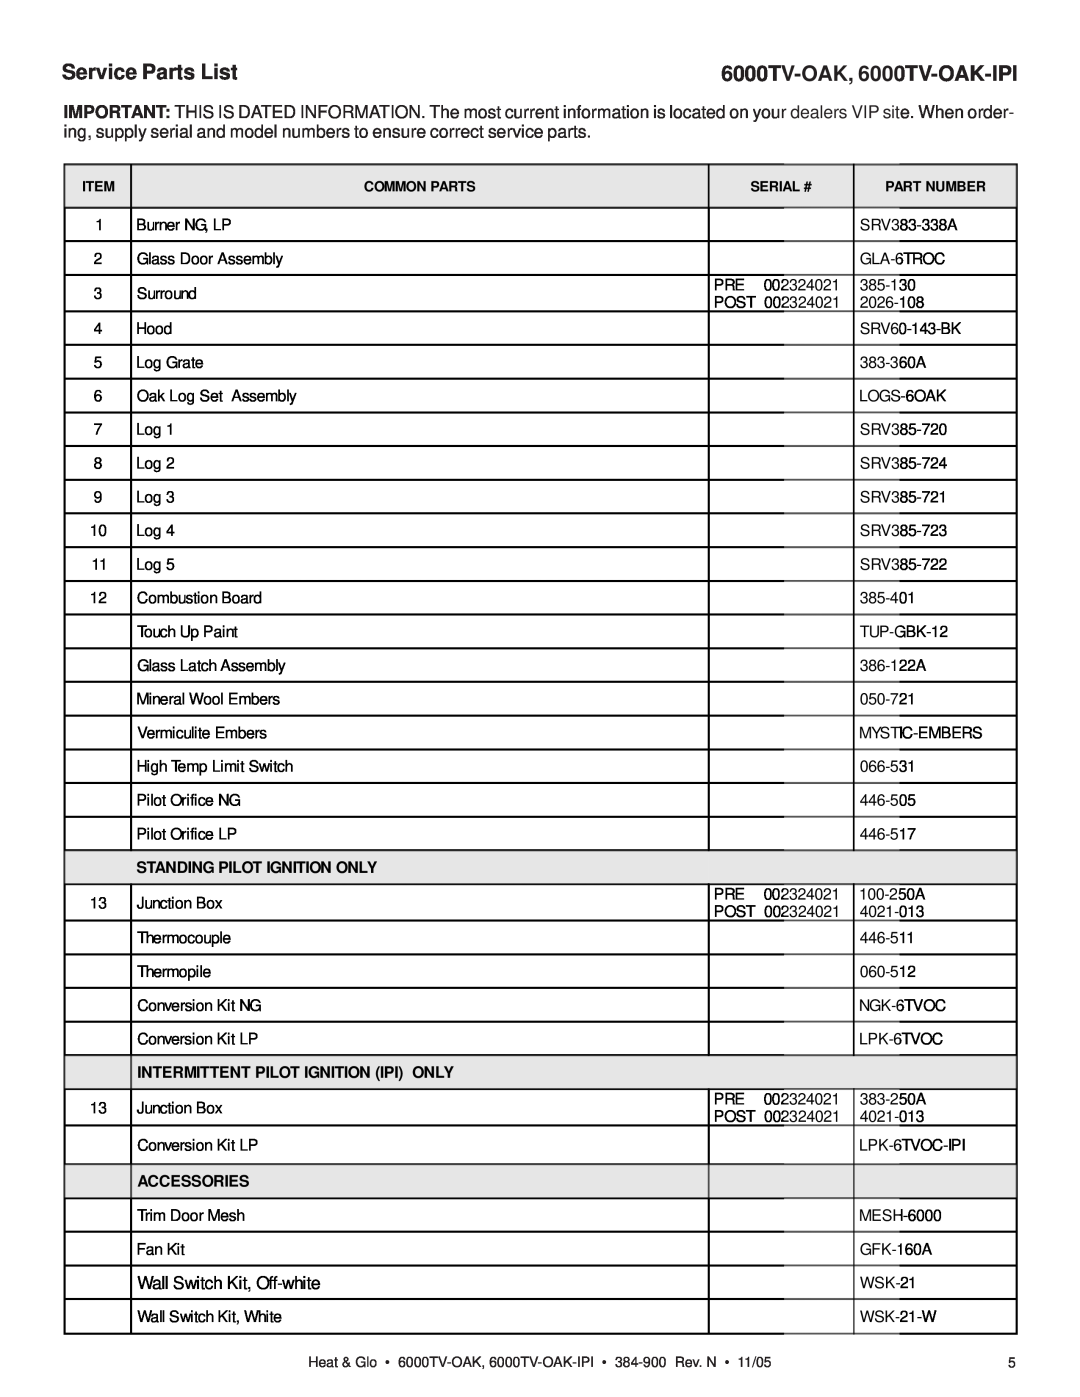 Heat & Glo LifeStyle Service Parts List, 6000TV-OAK, 6000TV-OAK-IPI, Wall Switch Kit, Off-white, Accessories 